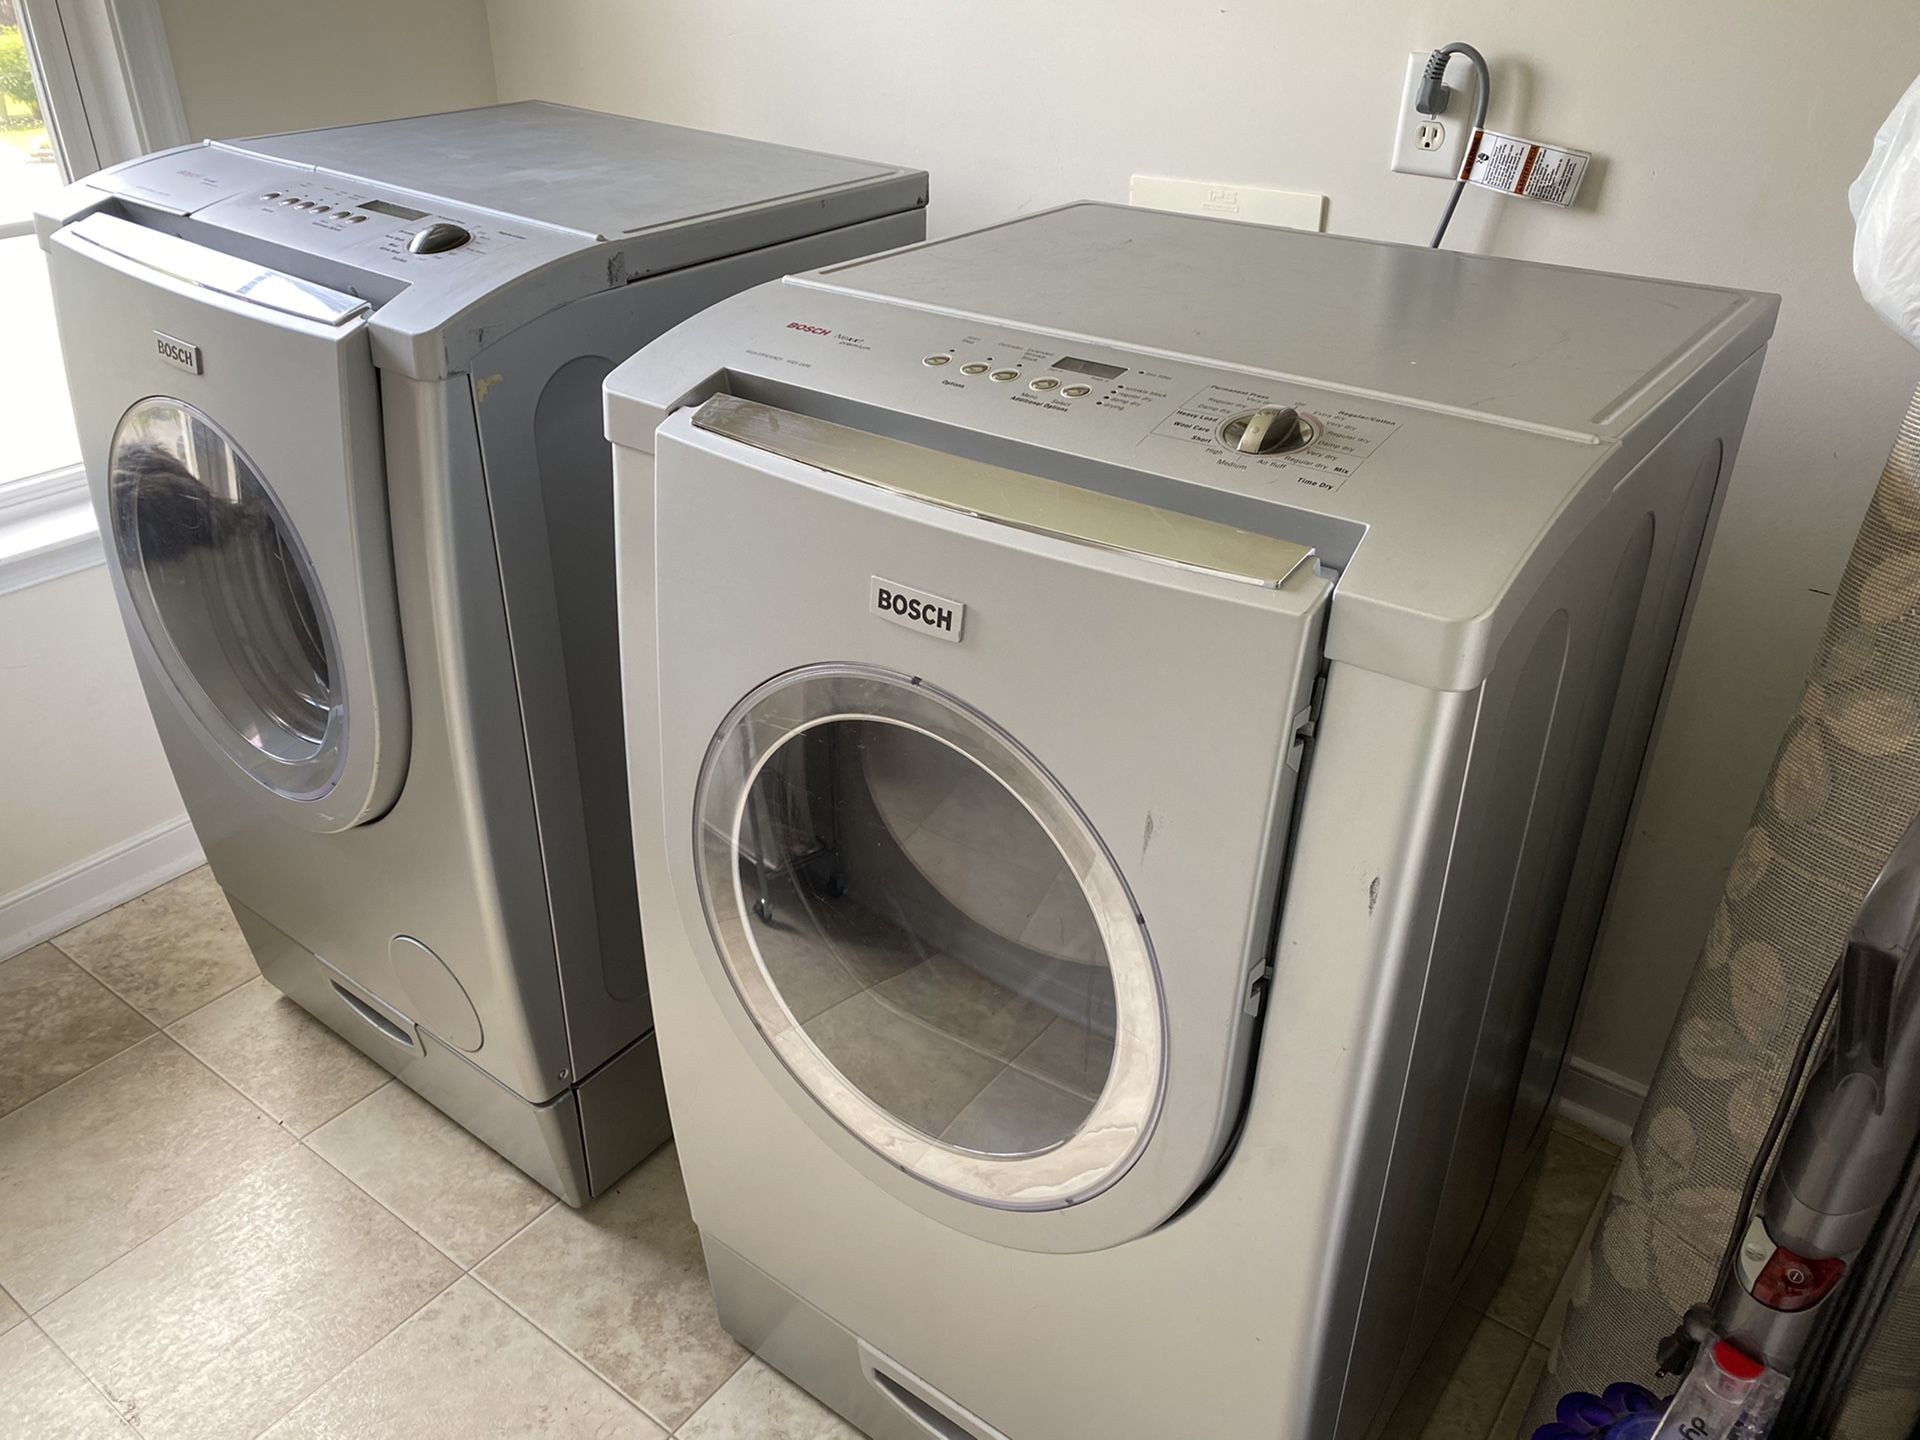 Bosch washer / dryer set with pedestal drawers